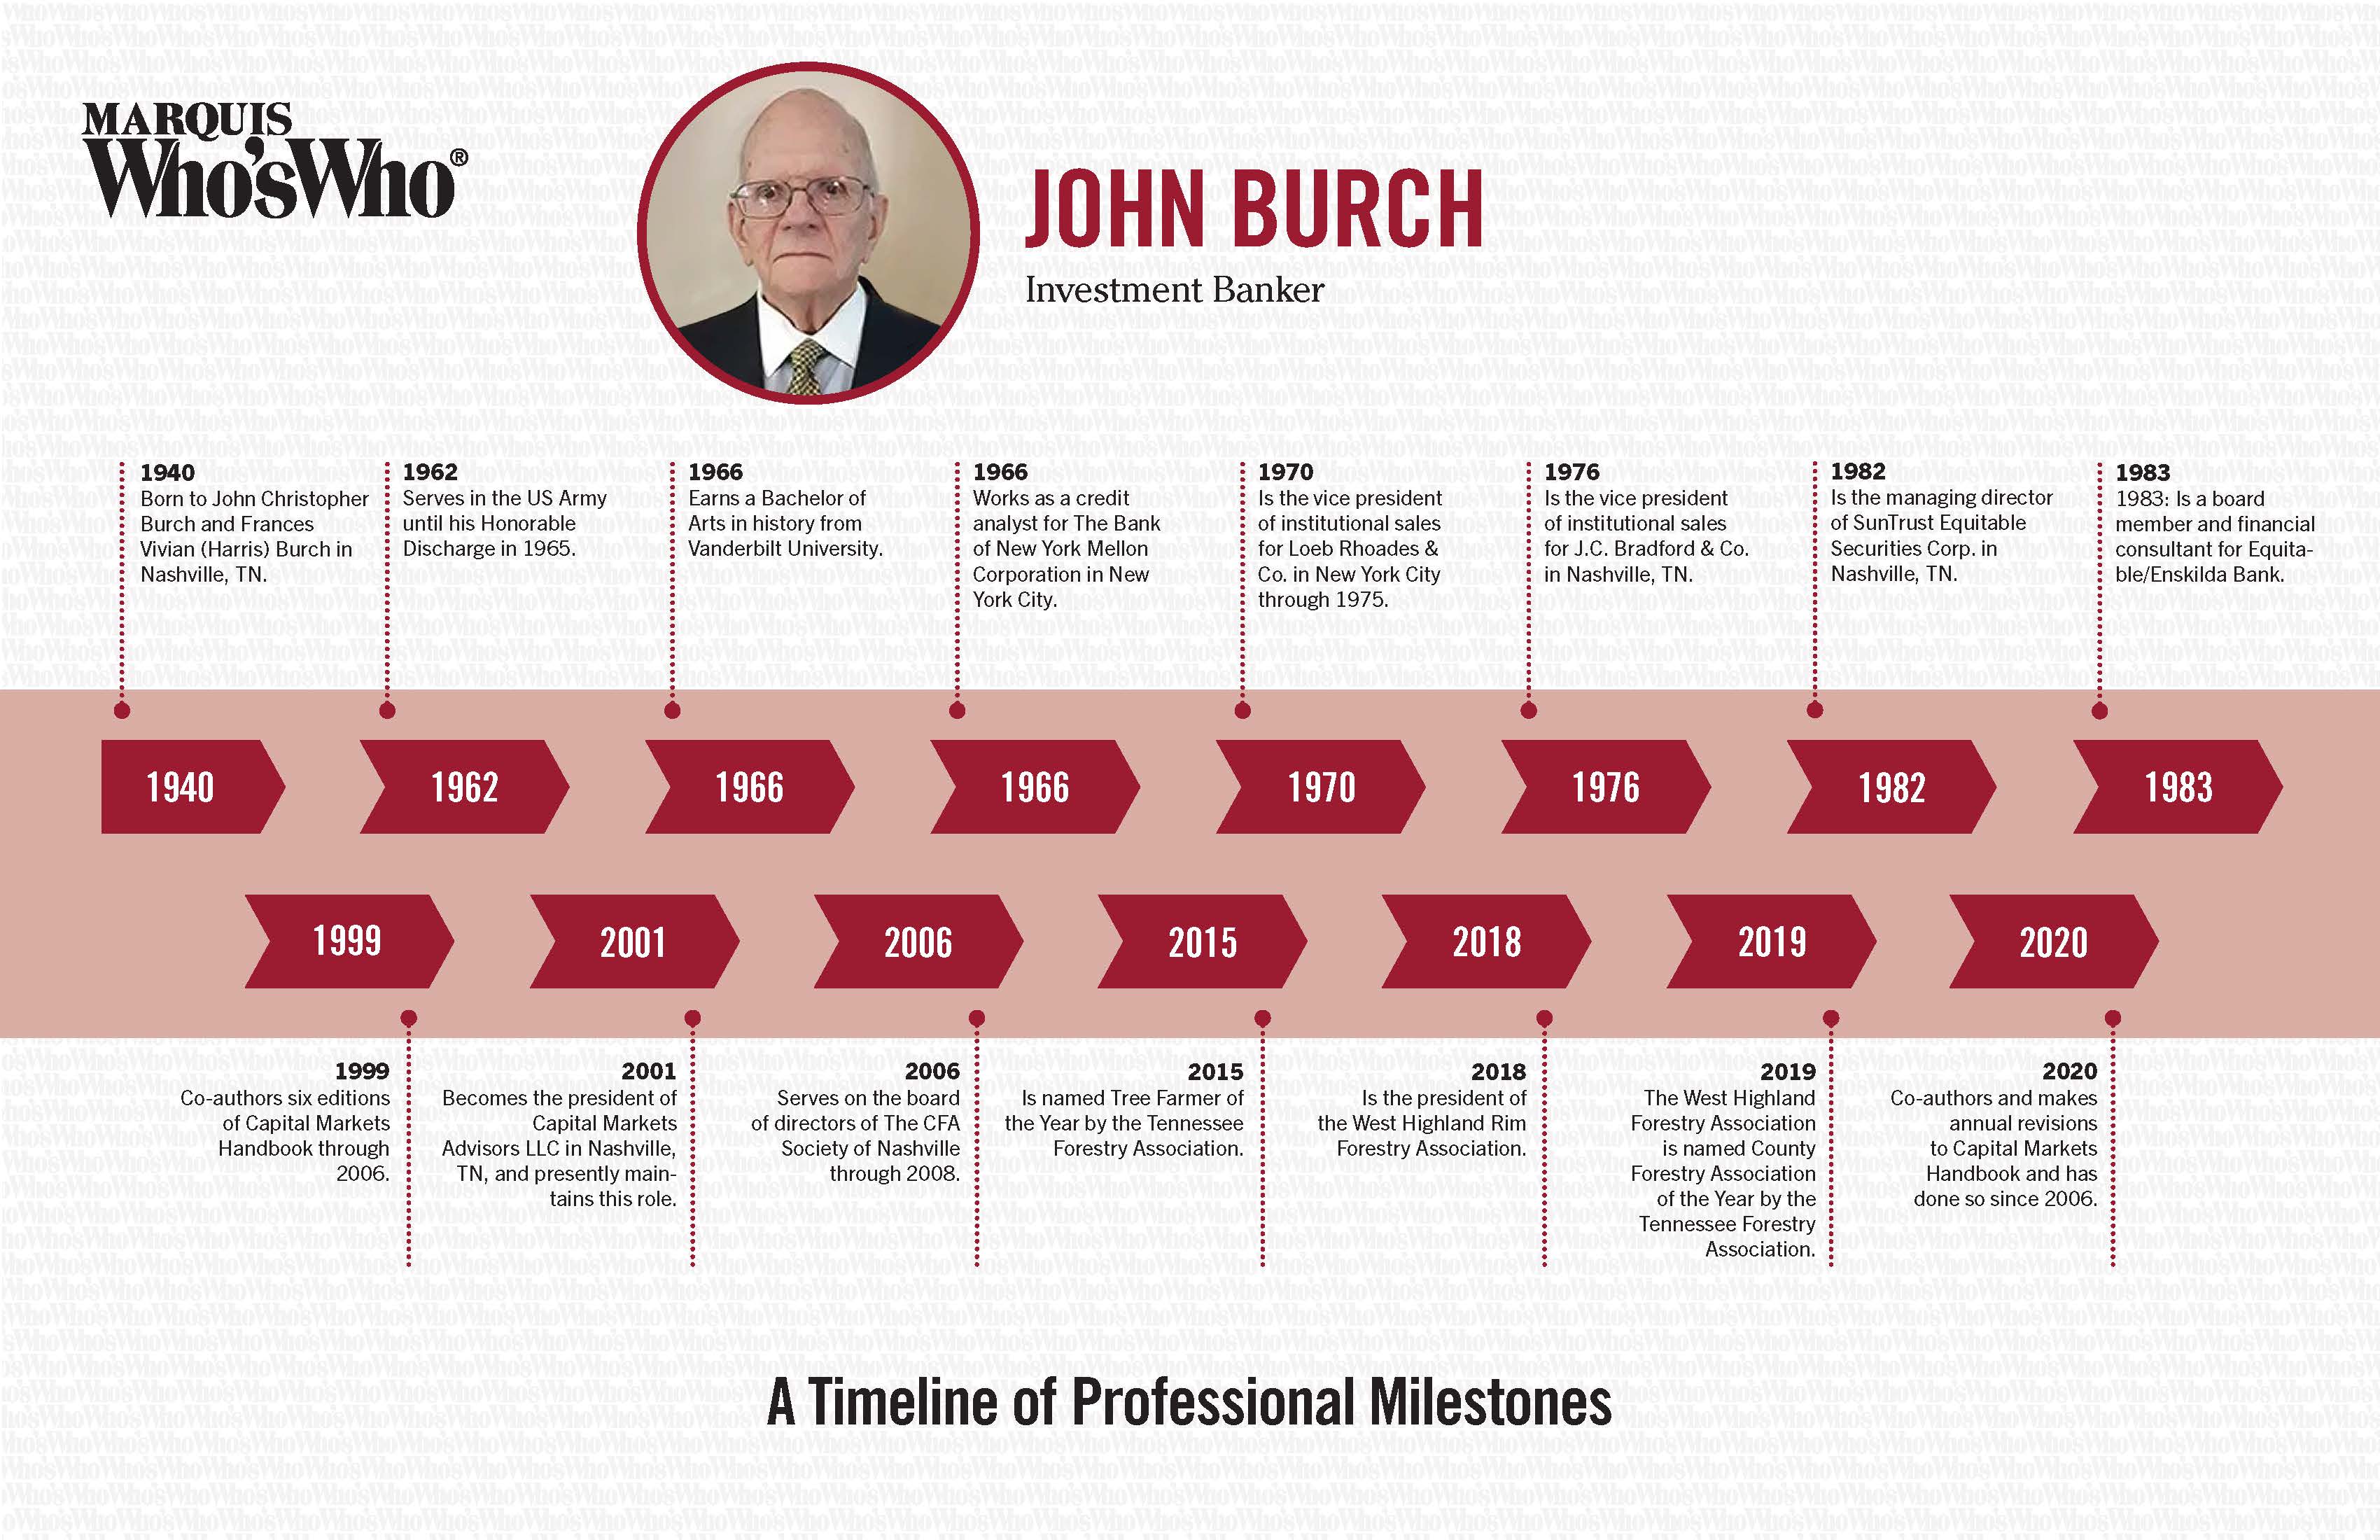 John Burch